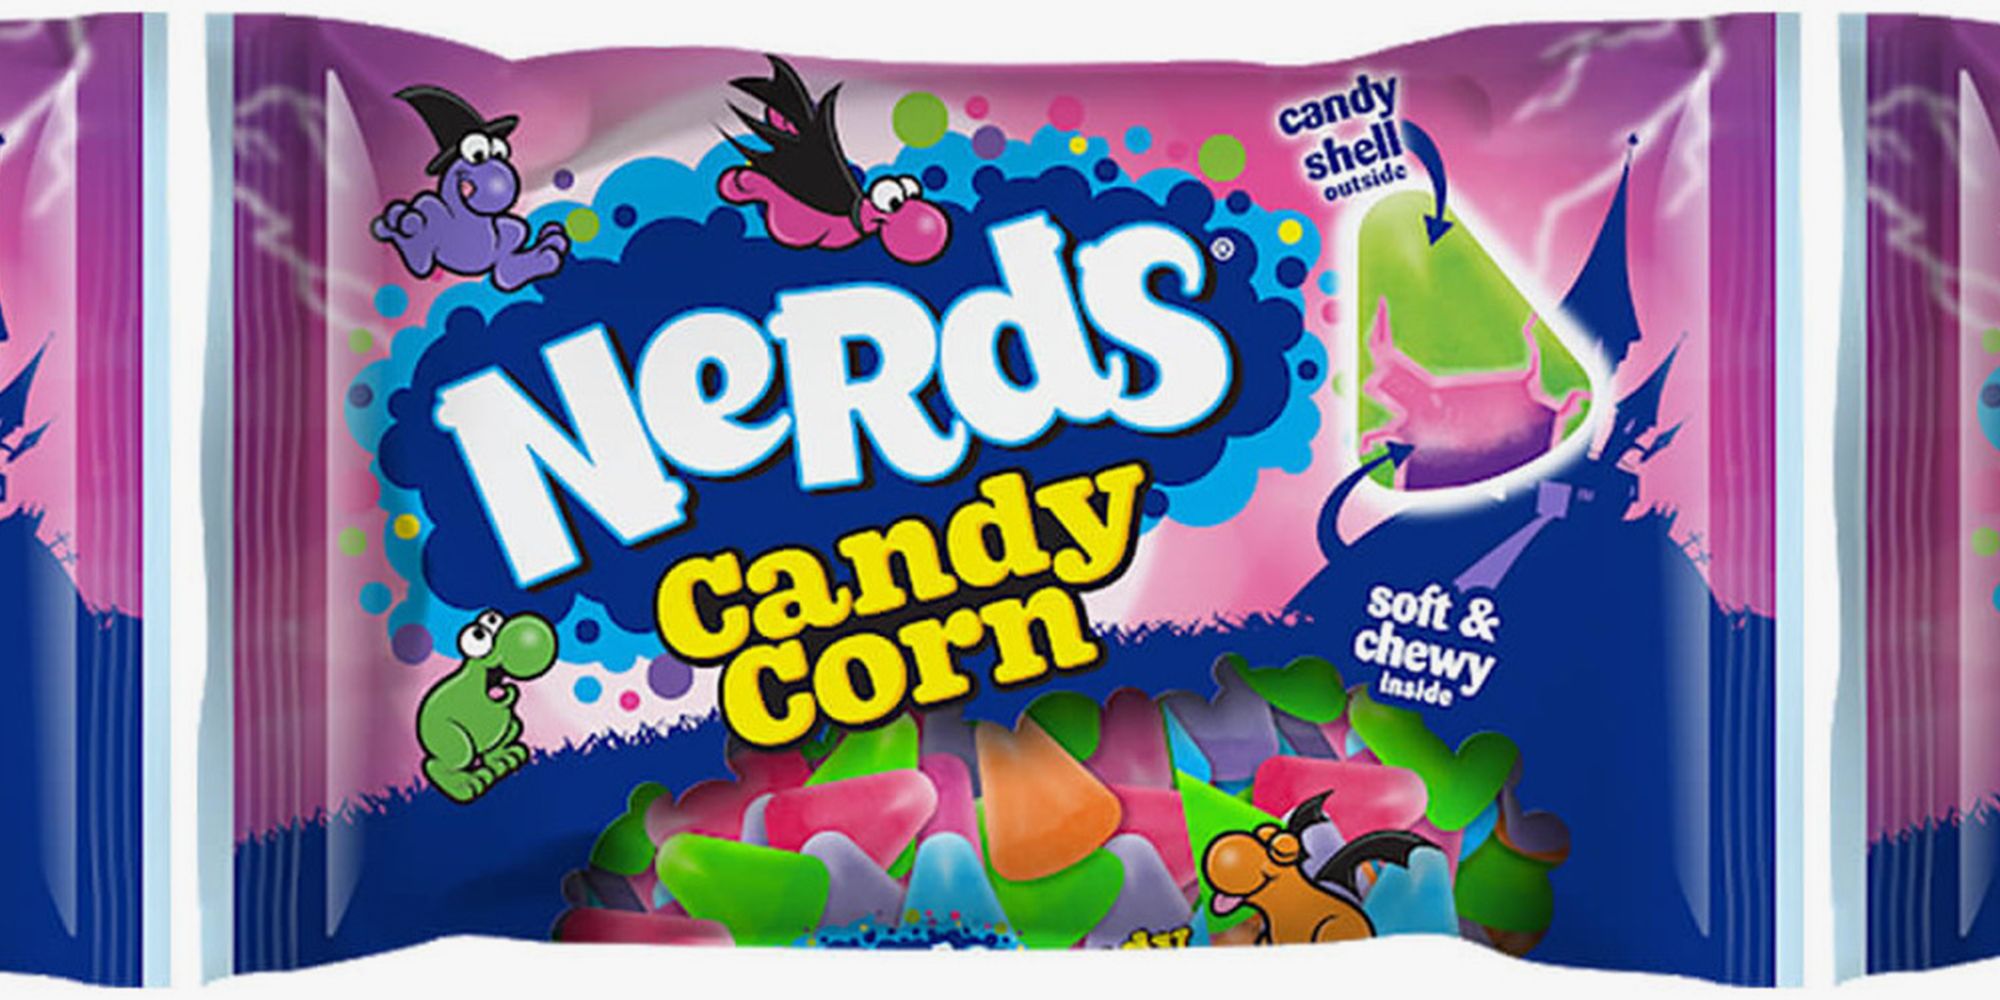 nerds candy